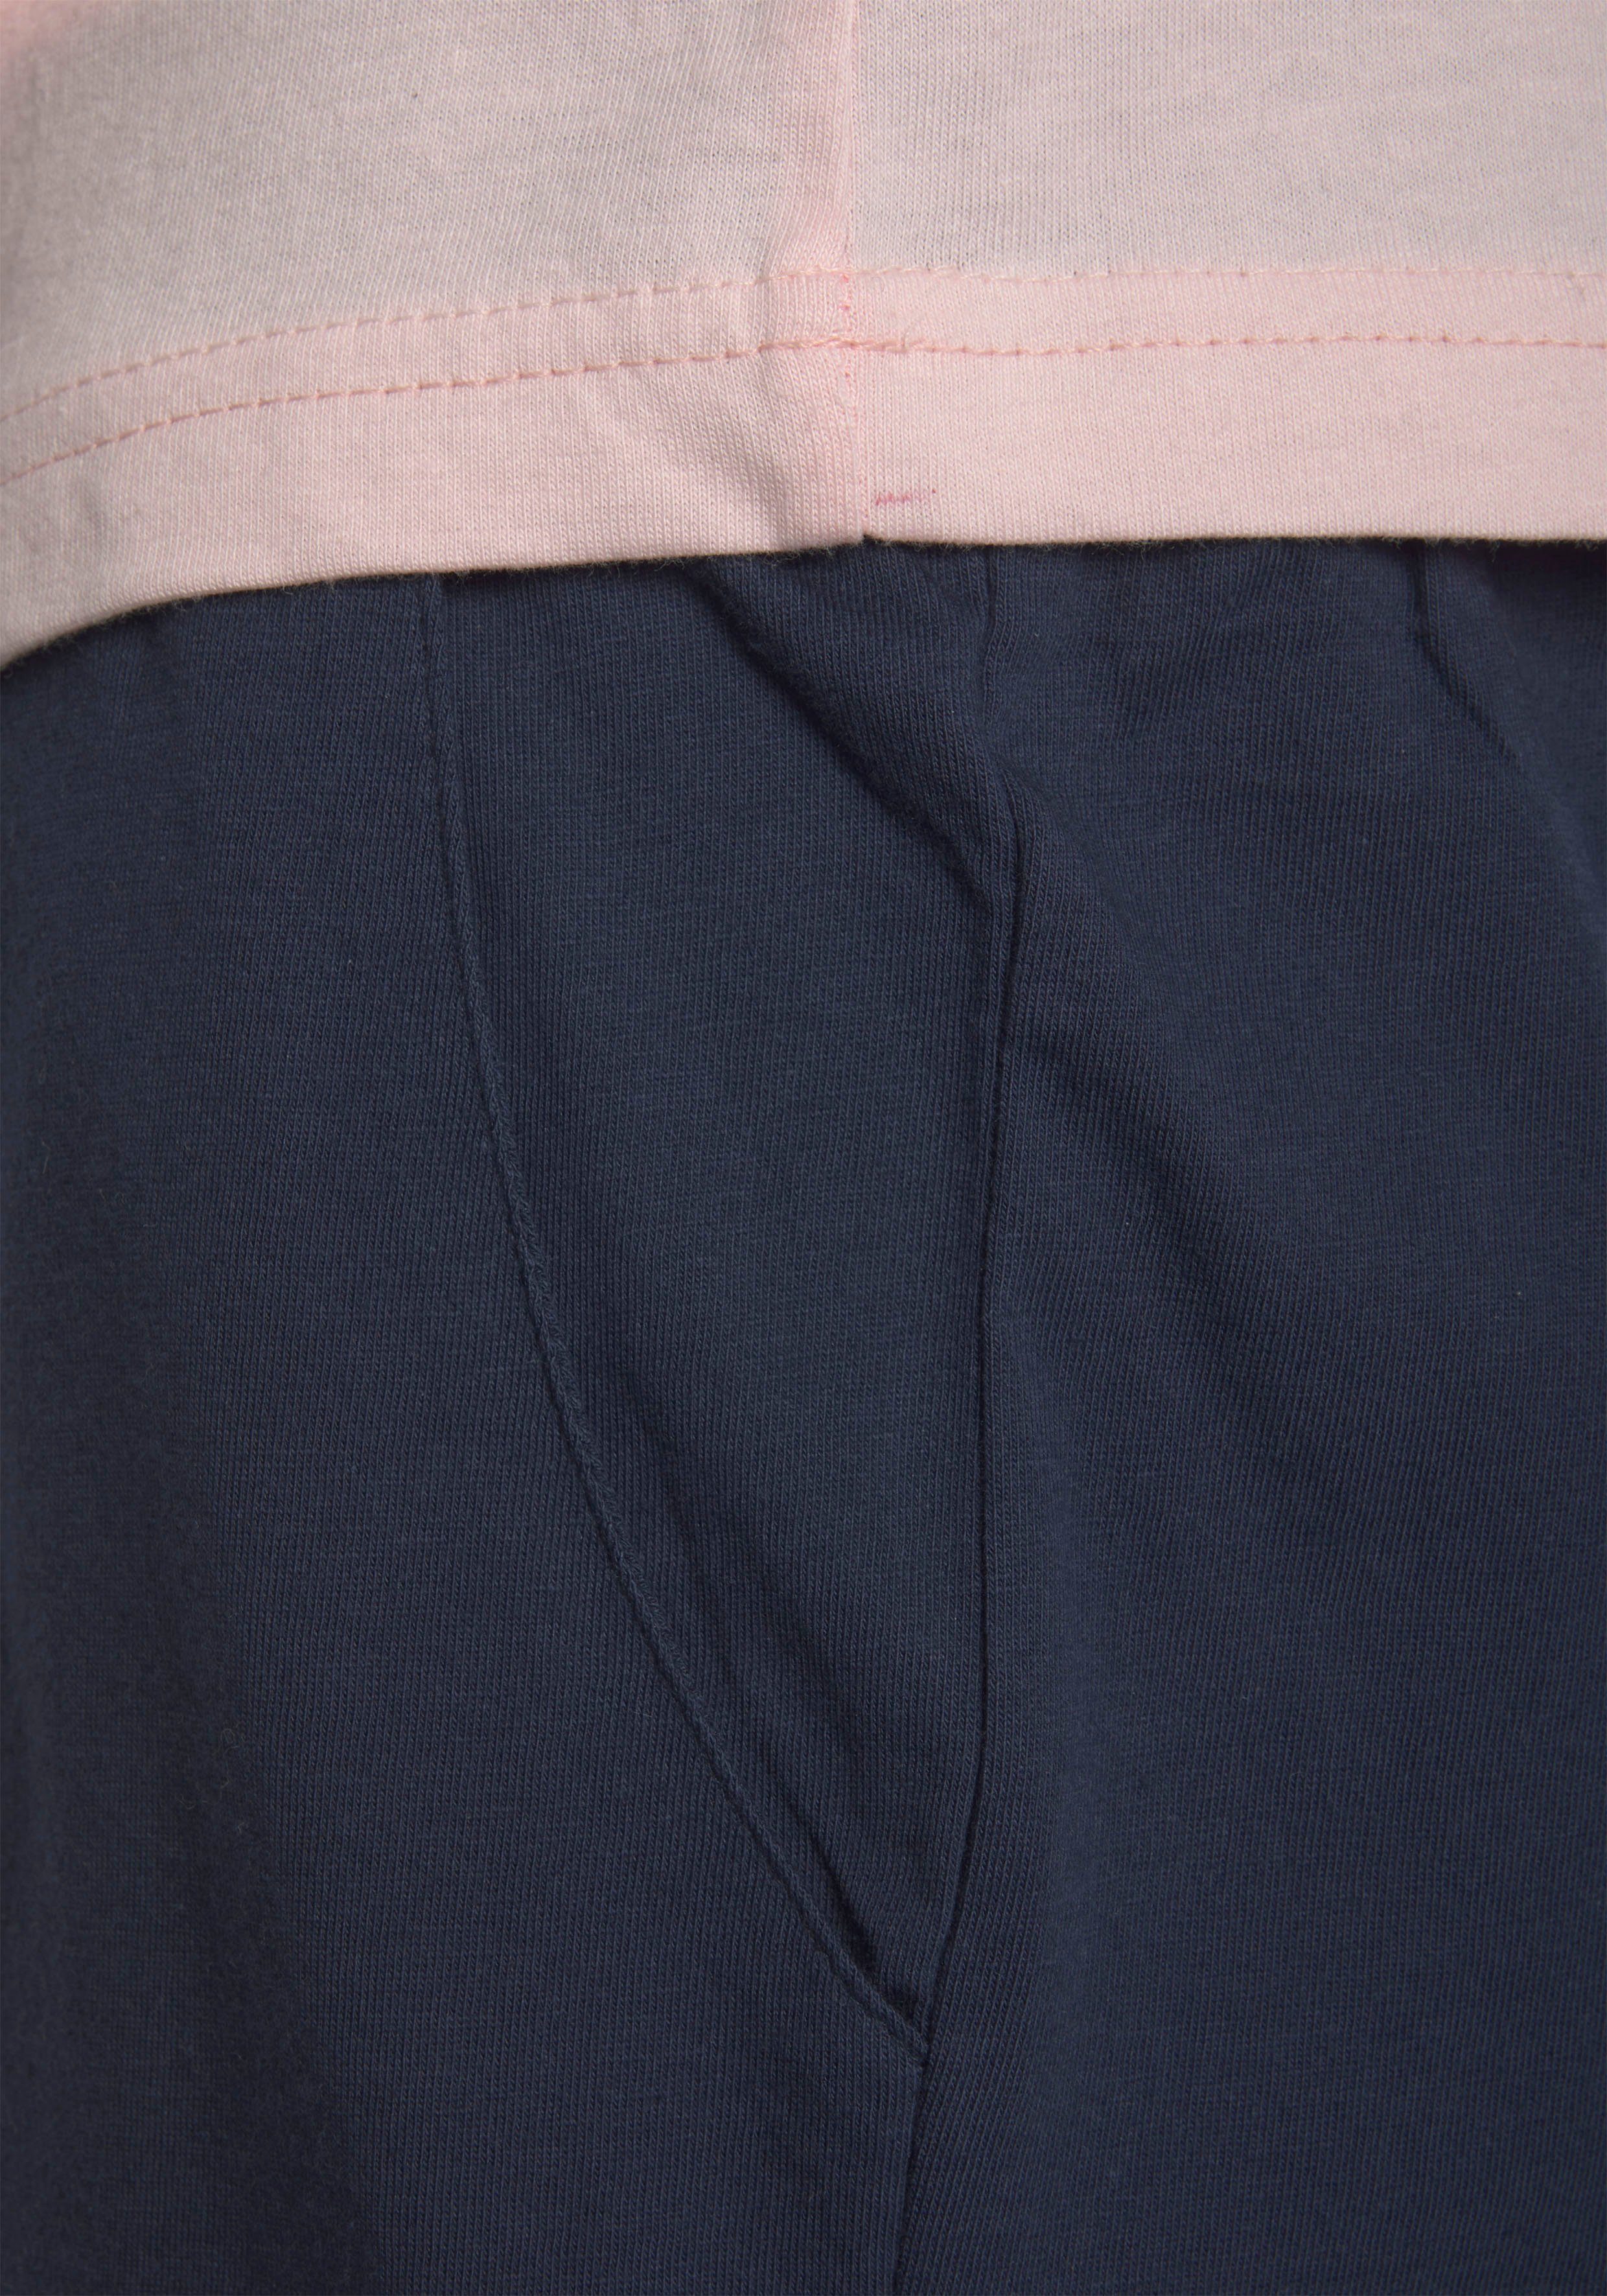 KangaROOS Shorty (2 tlg., 1 Stück) rosa-dunkelblau Raglanärmeln mit kontrastfarbenen